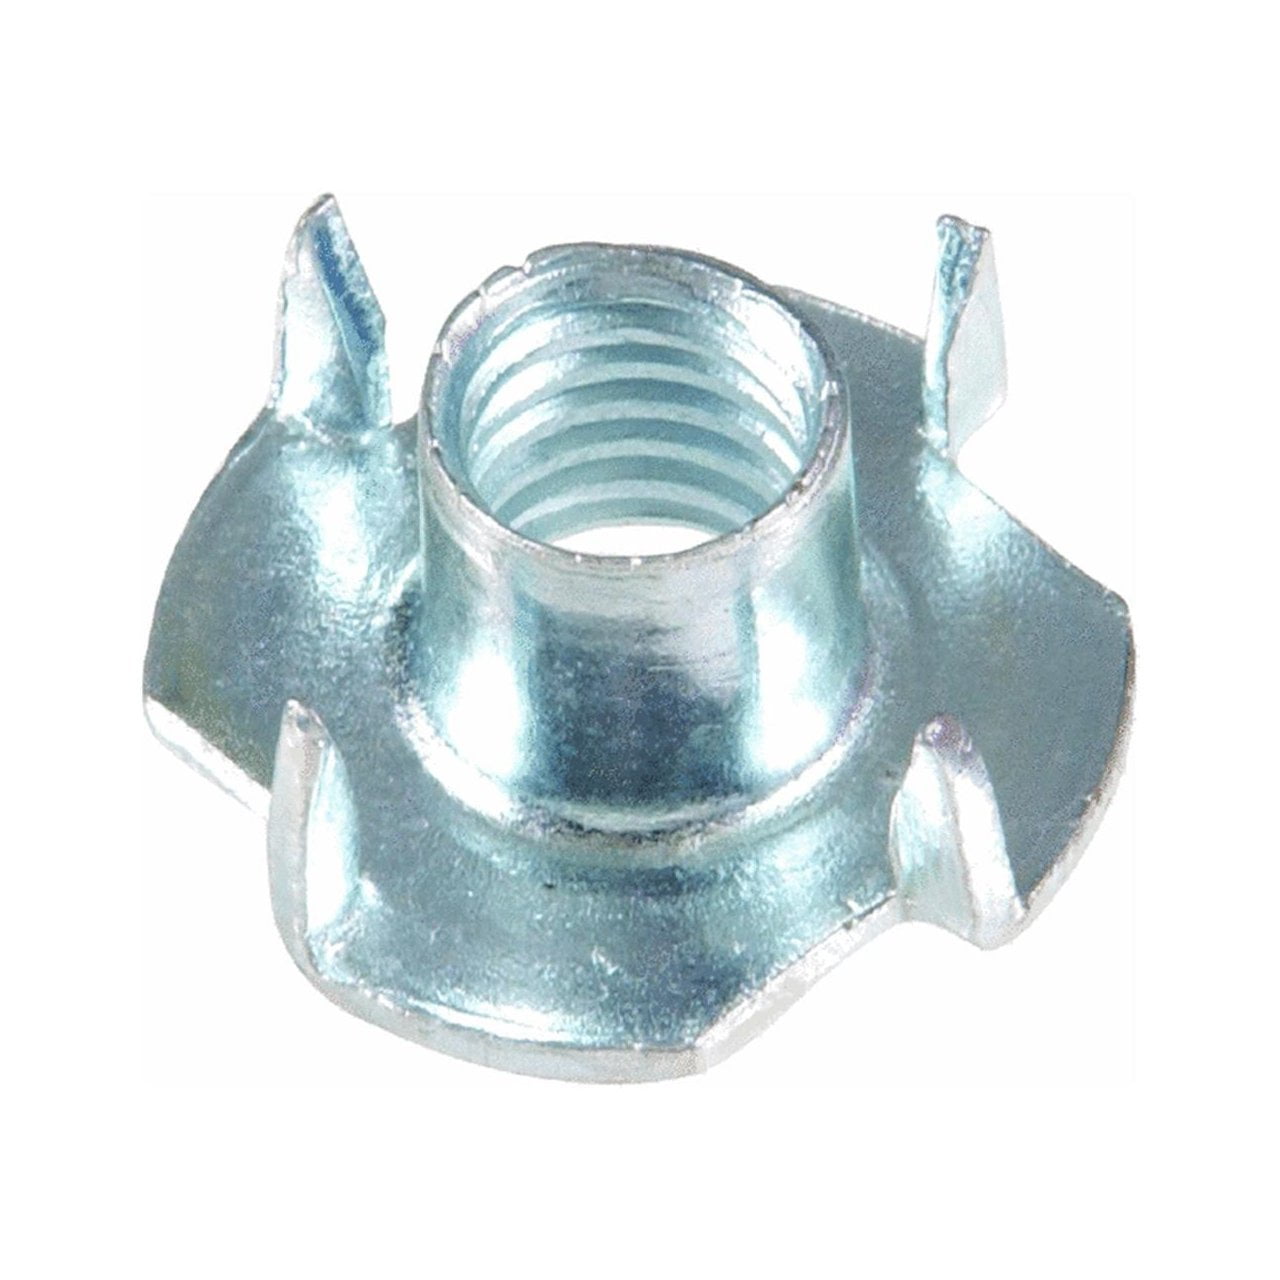 Zinc Plated 250 Pcs Quality Metal Fast 3 Prong T-Nut 3/8-16 x 7/16 Tee Nut hex Nuts